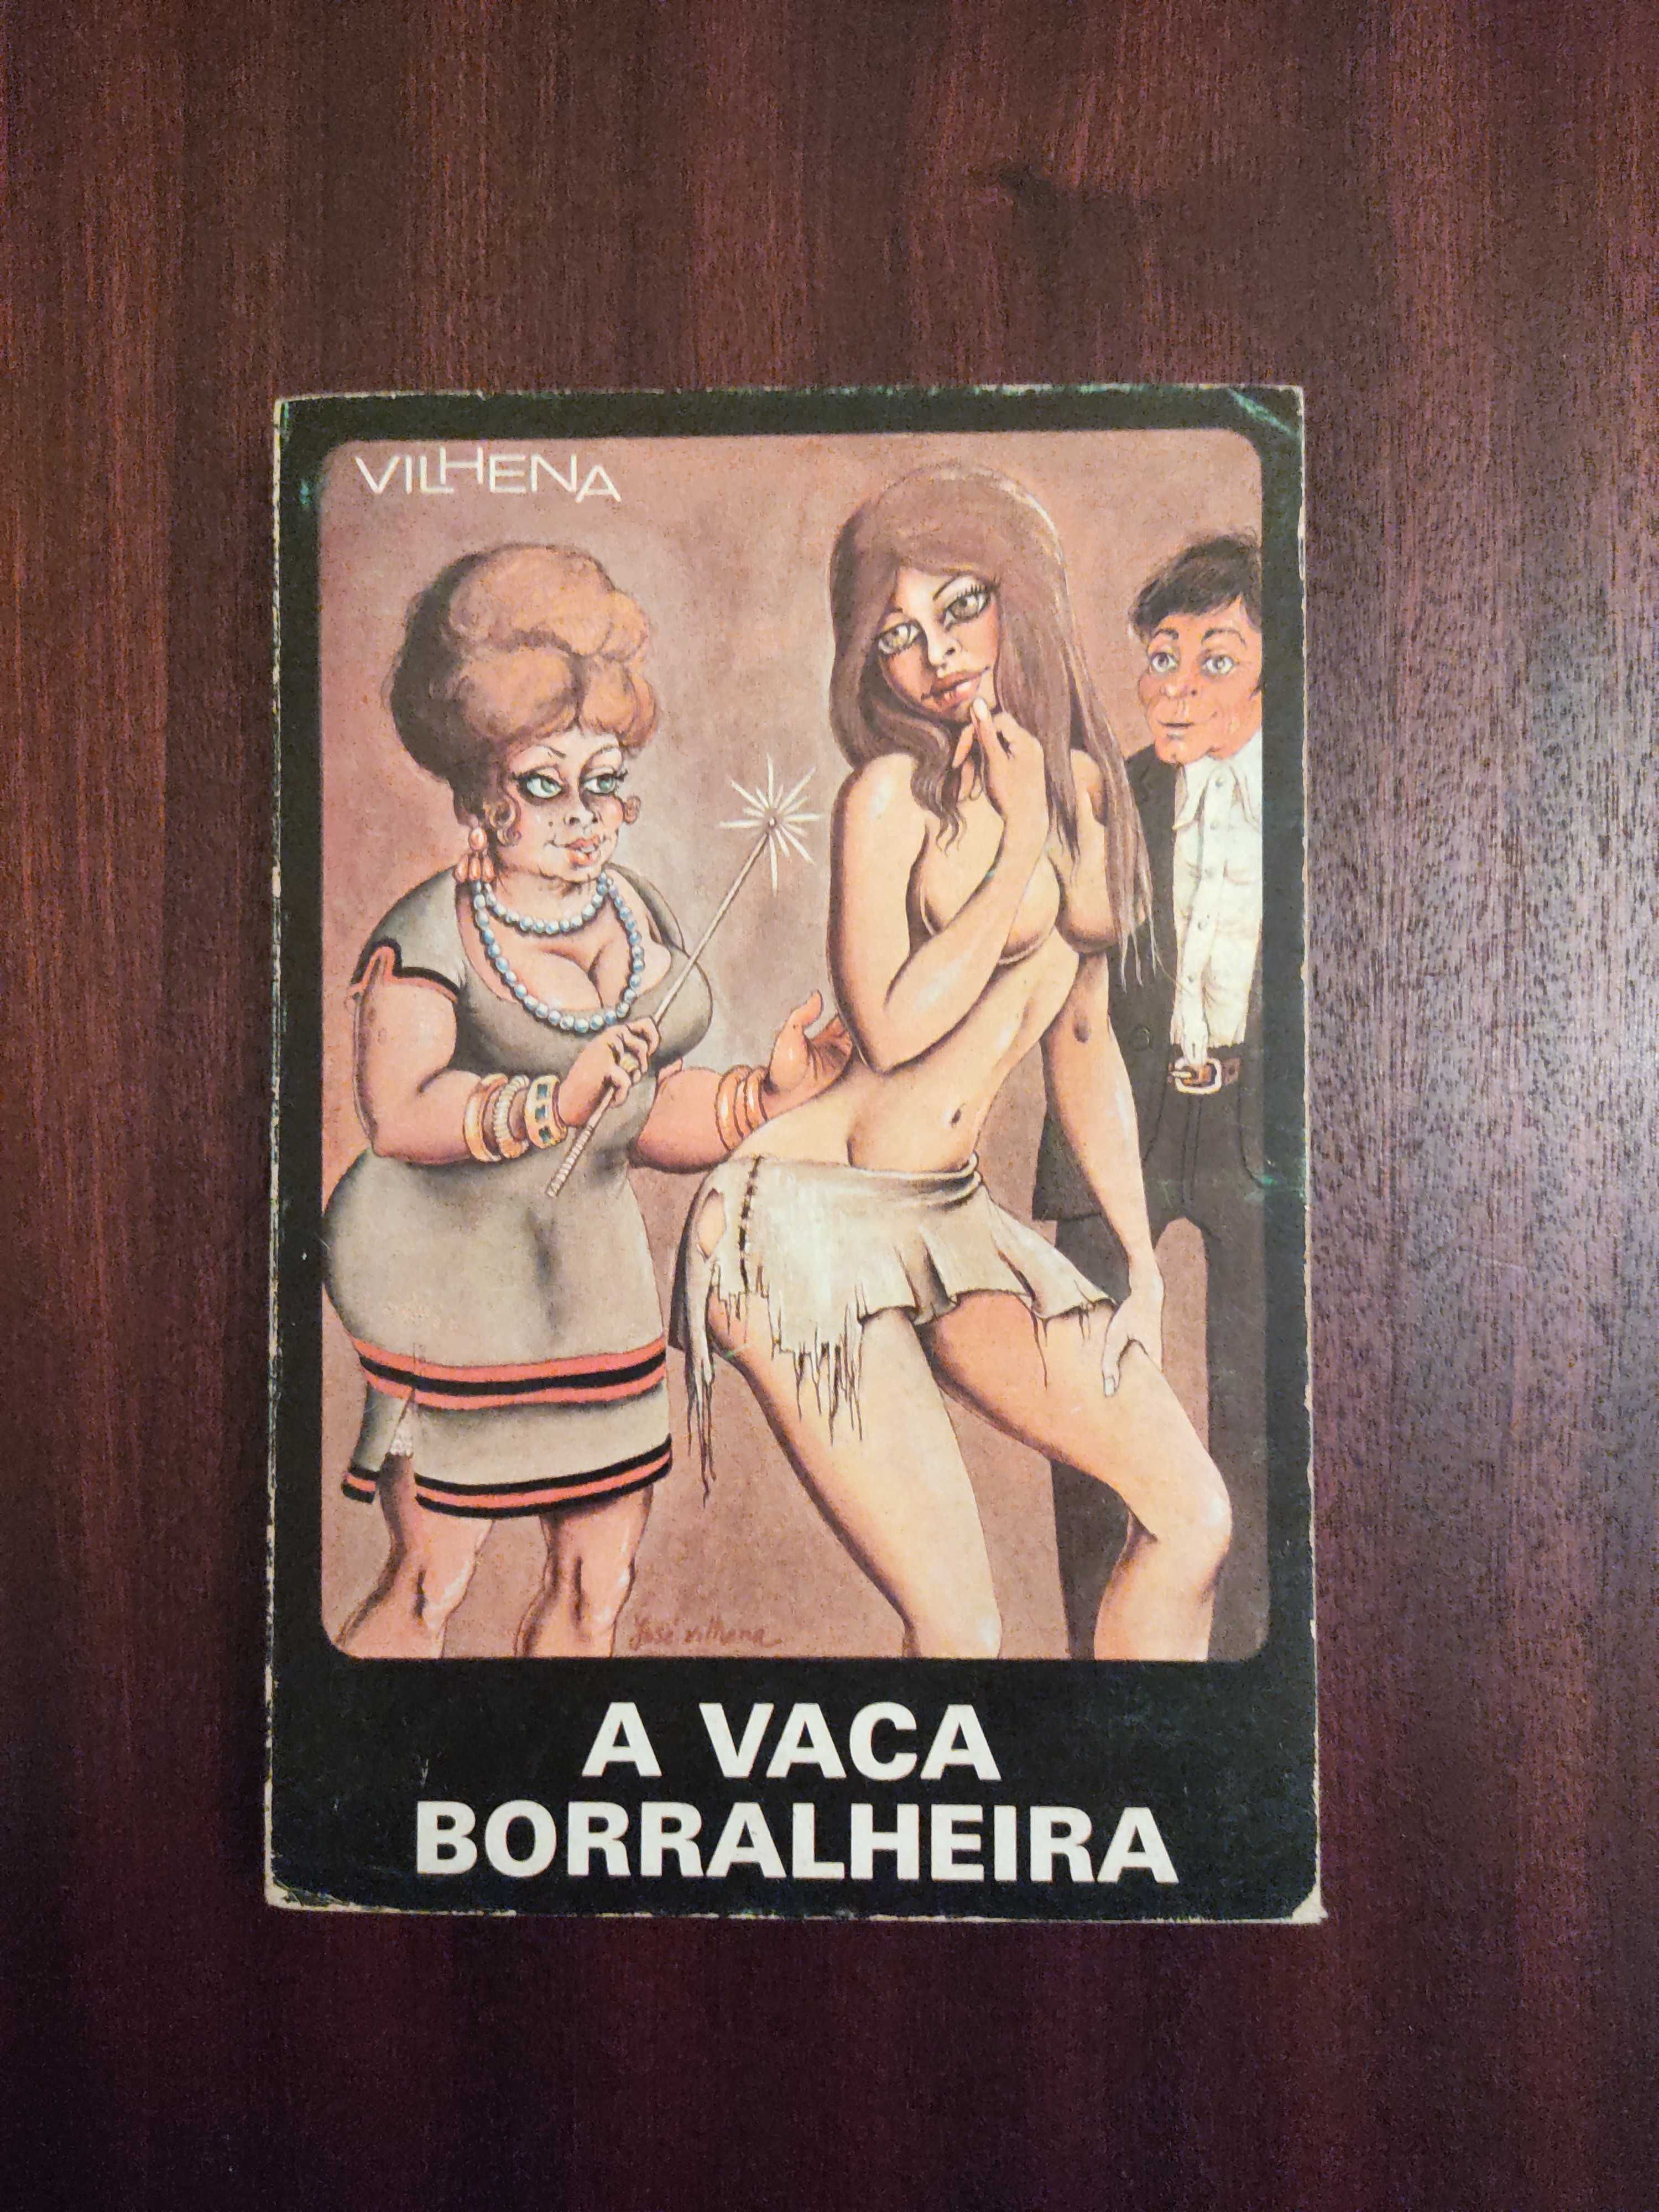 Livro "A Vaca Borralheira" de José Vilhena